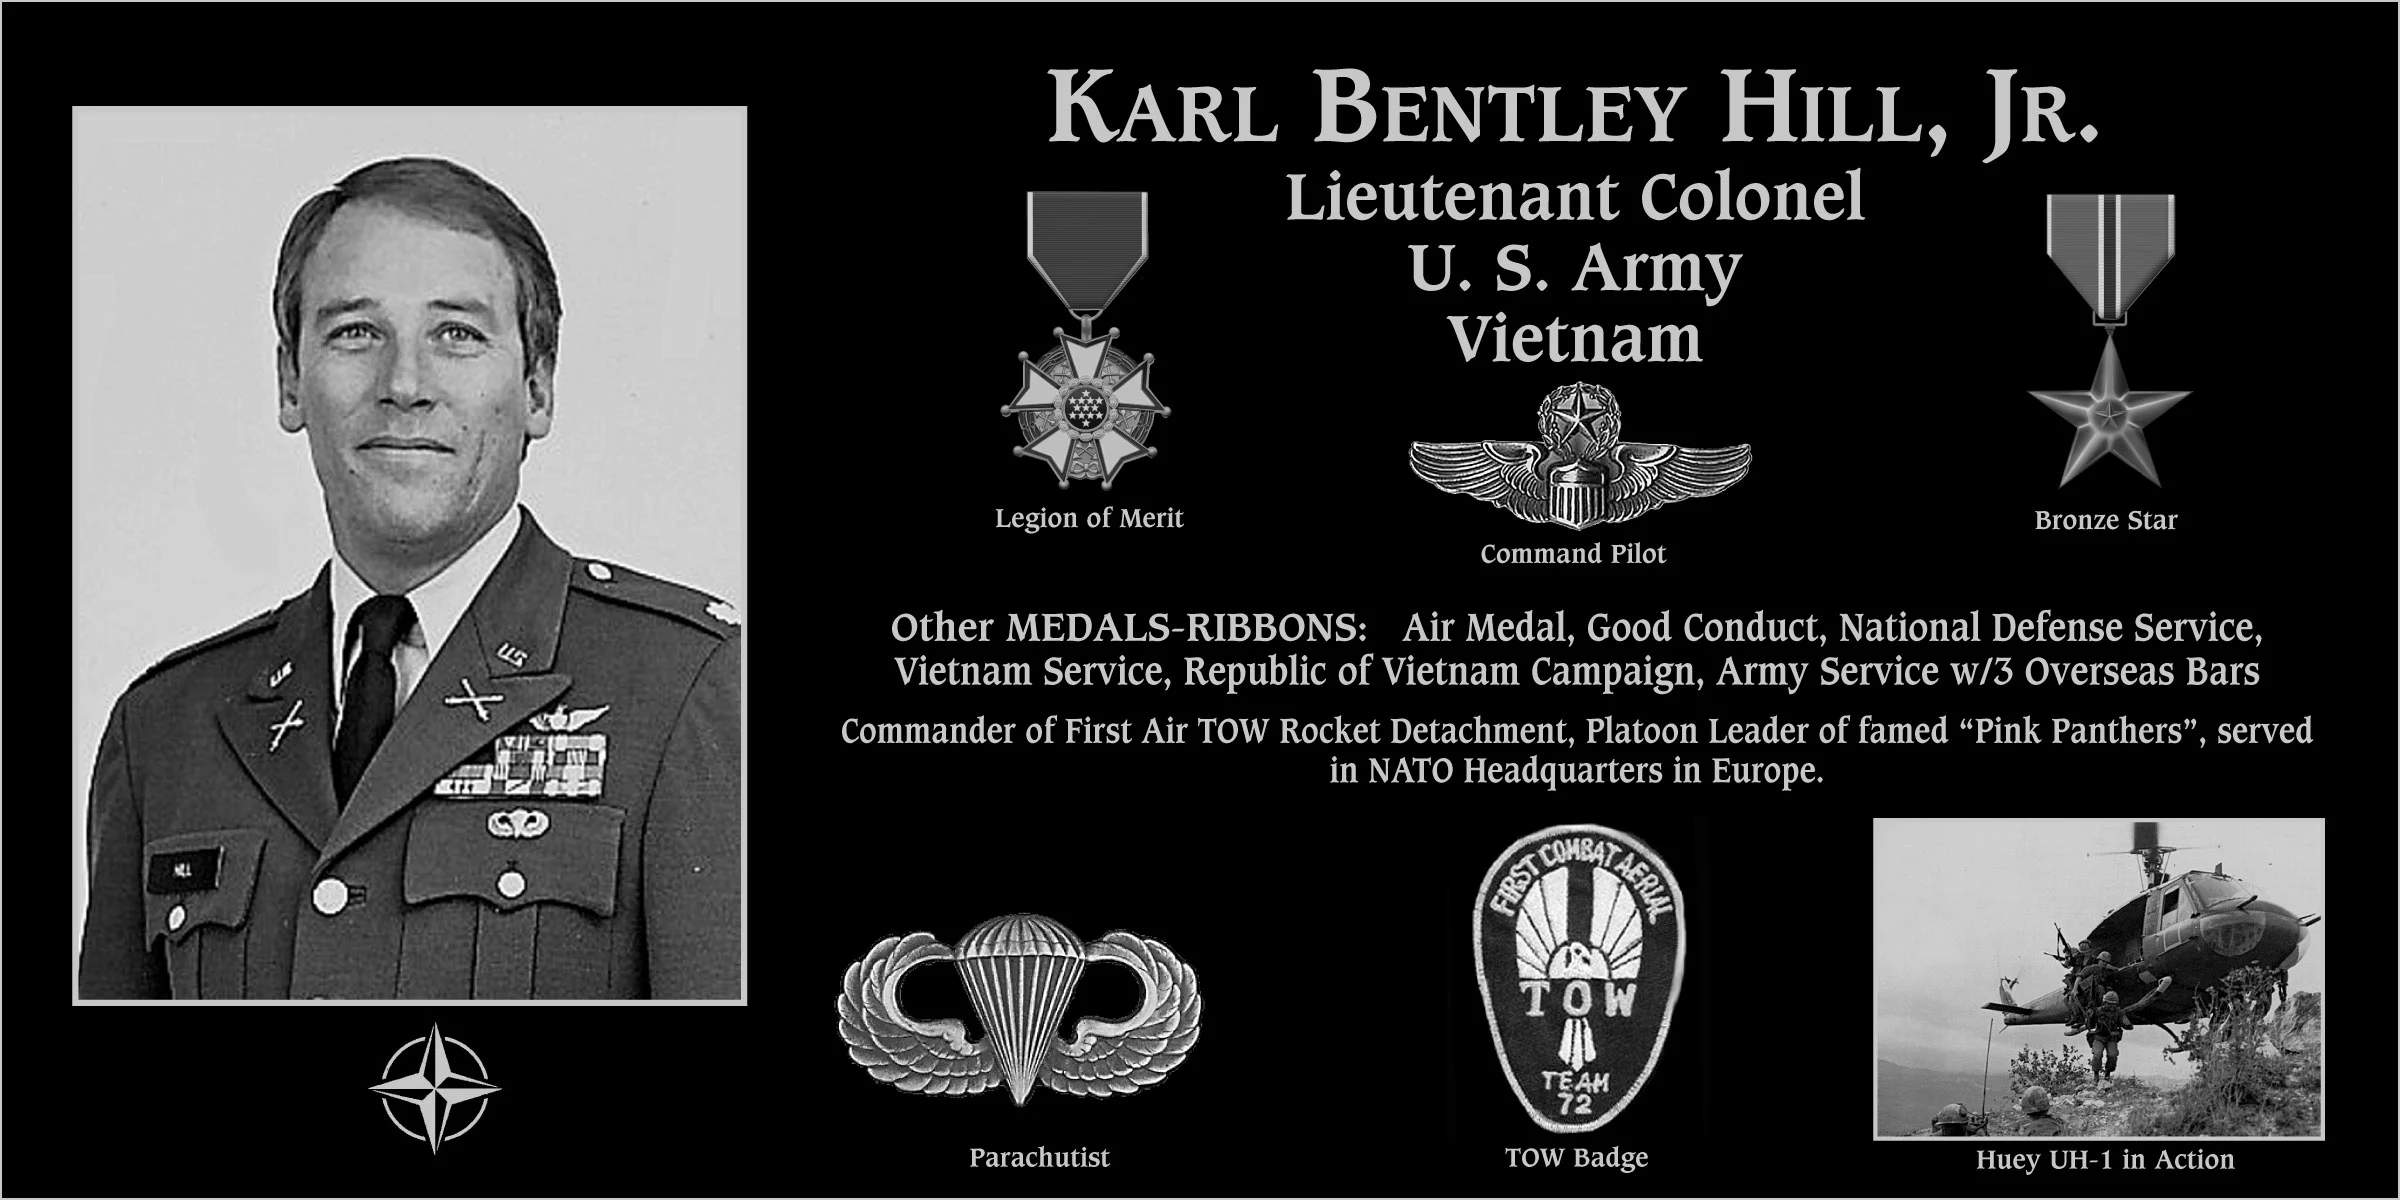 Karl Bentley Hill jr